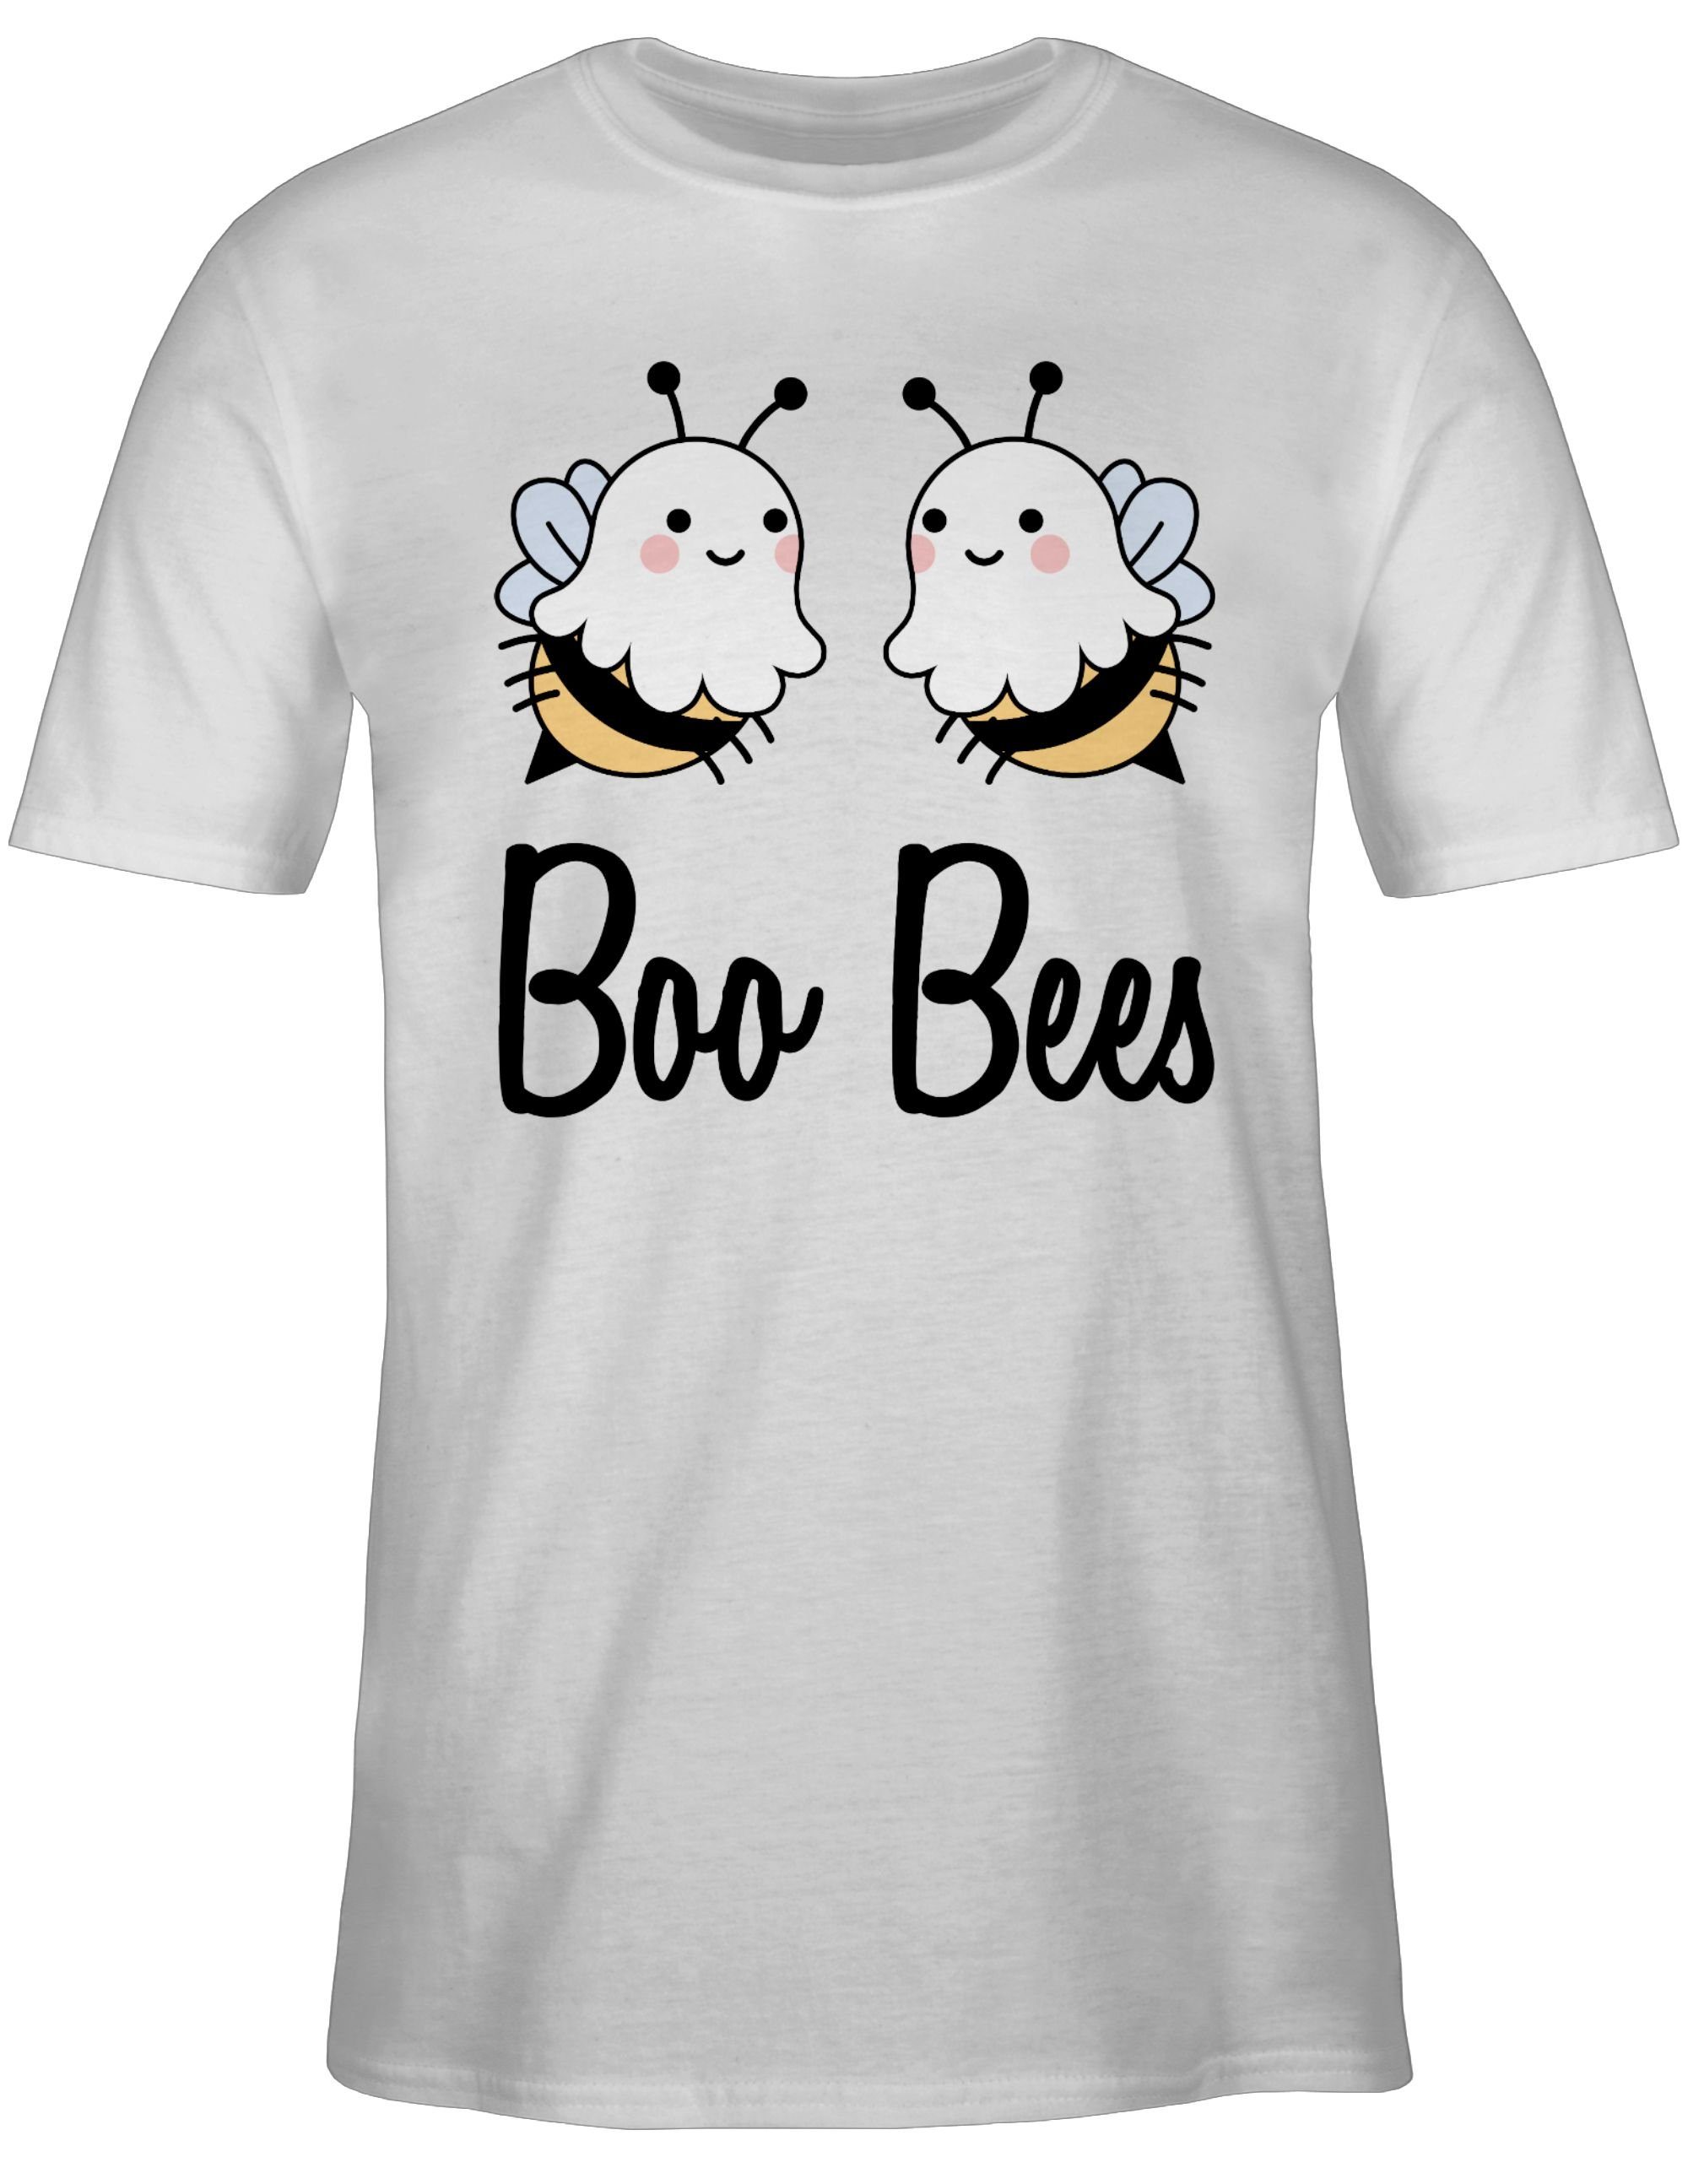 Shirtracer T-Shirt Boo Bees Boobees Bienen Boobs Halloween Kostüme Herren 3 Weiß